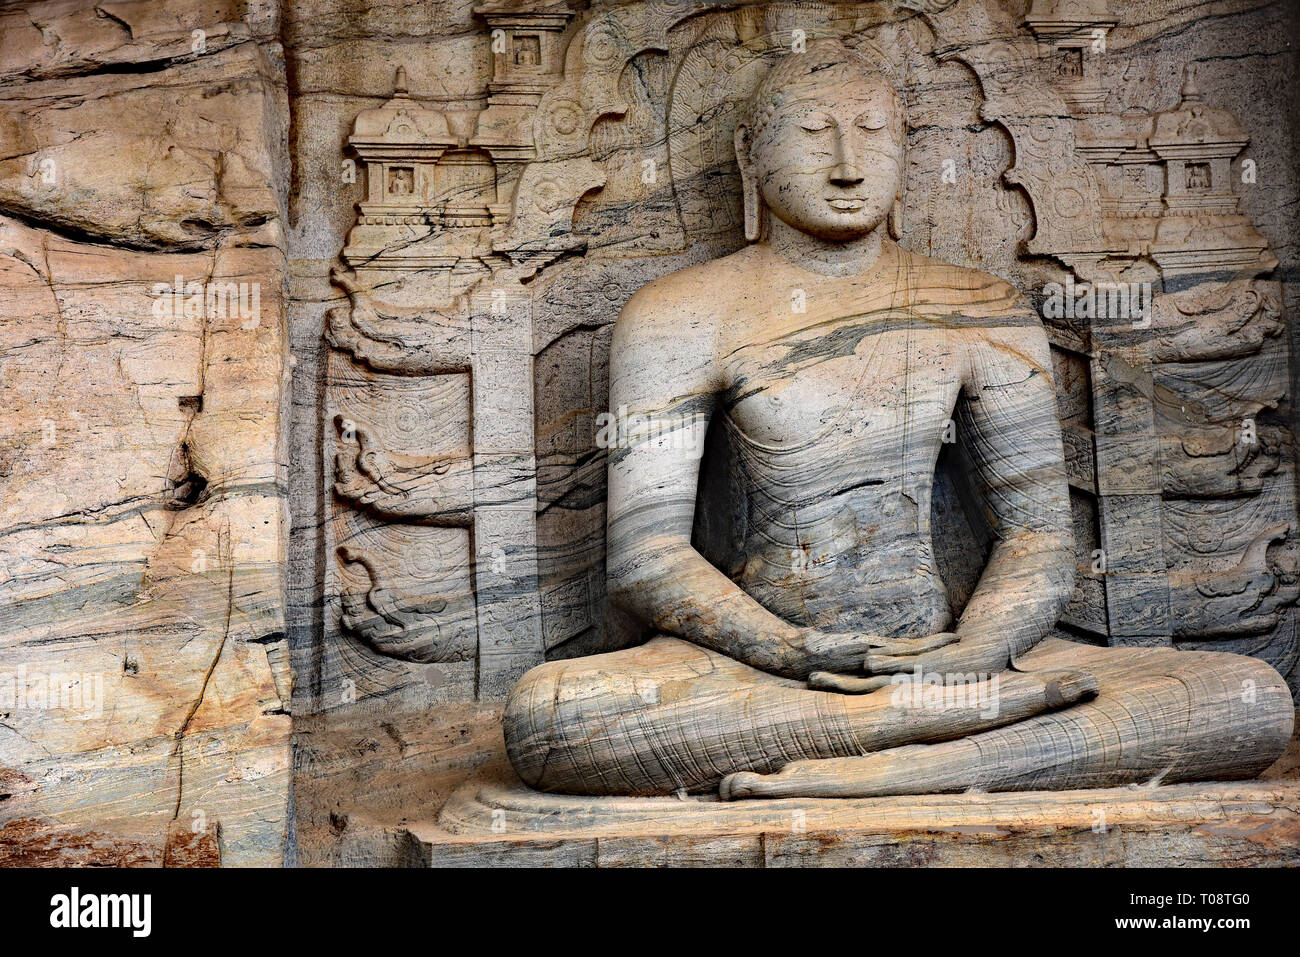 Gal Vihara seated Buddha statue, one of four Buddhas carved out of a single slab of granite, Polonnaruwa, Sri Lanka, Asia. Stock Photo